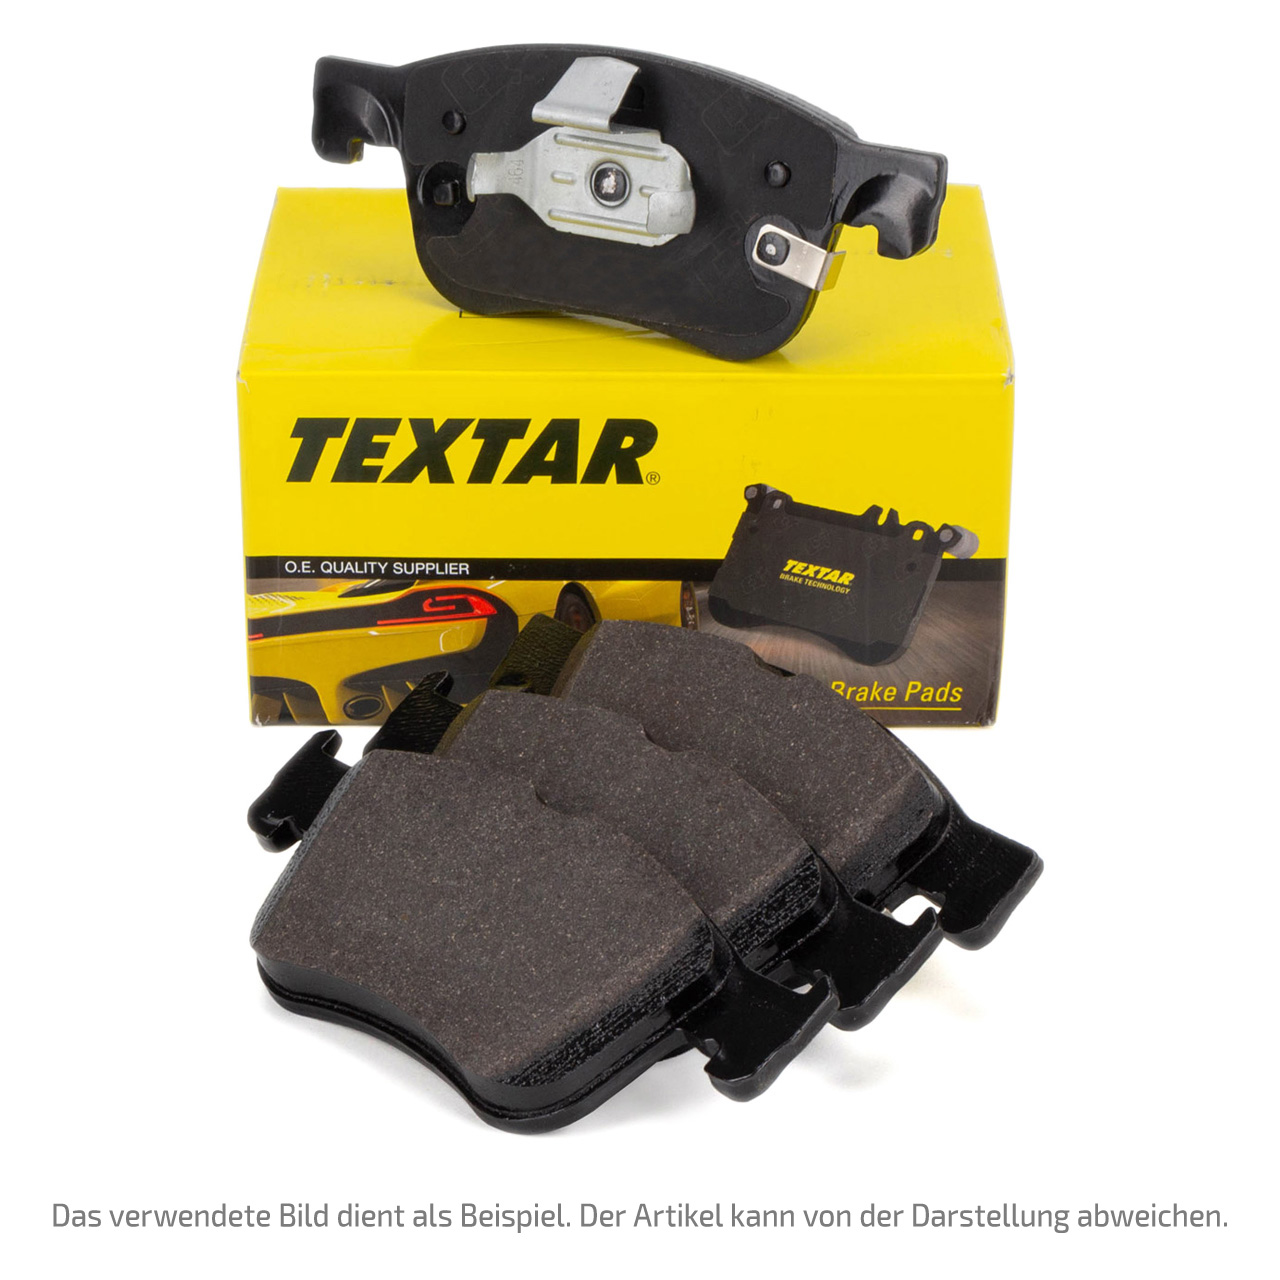 TEXTAR 2063402 Bremsbeläge Bremsklötze RENAULT Twingo 1 1.2 54-58 PS vorne